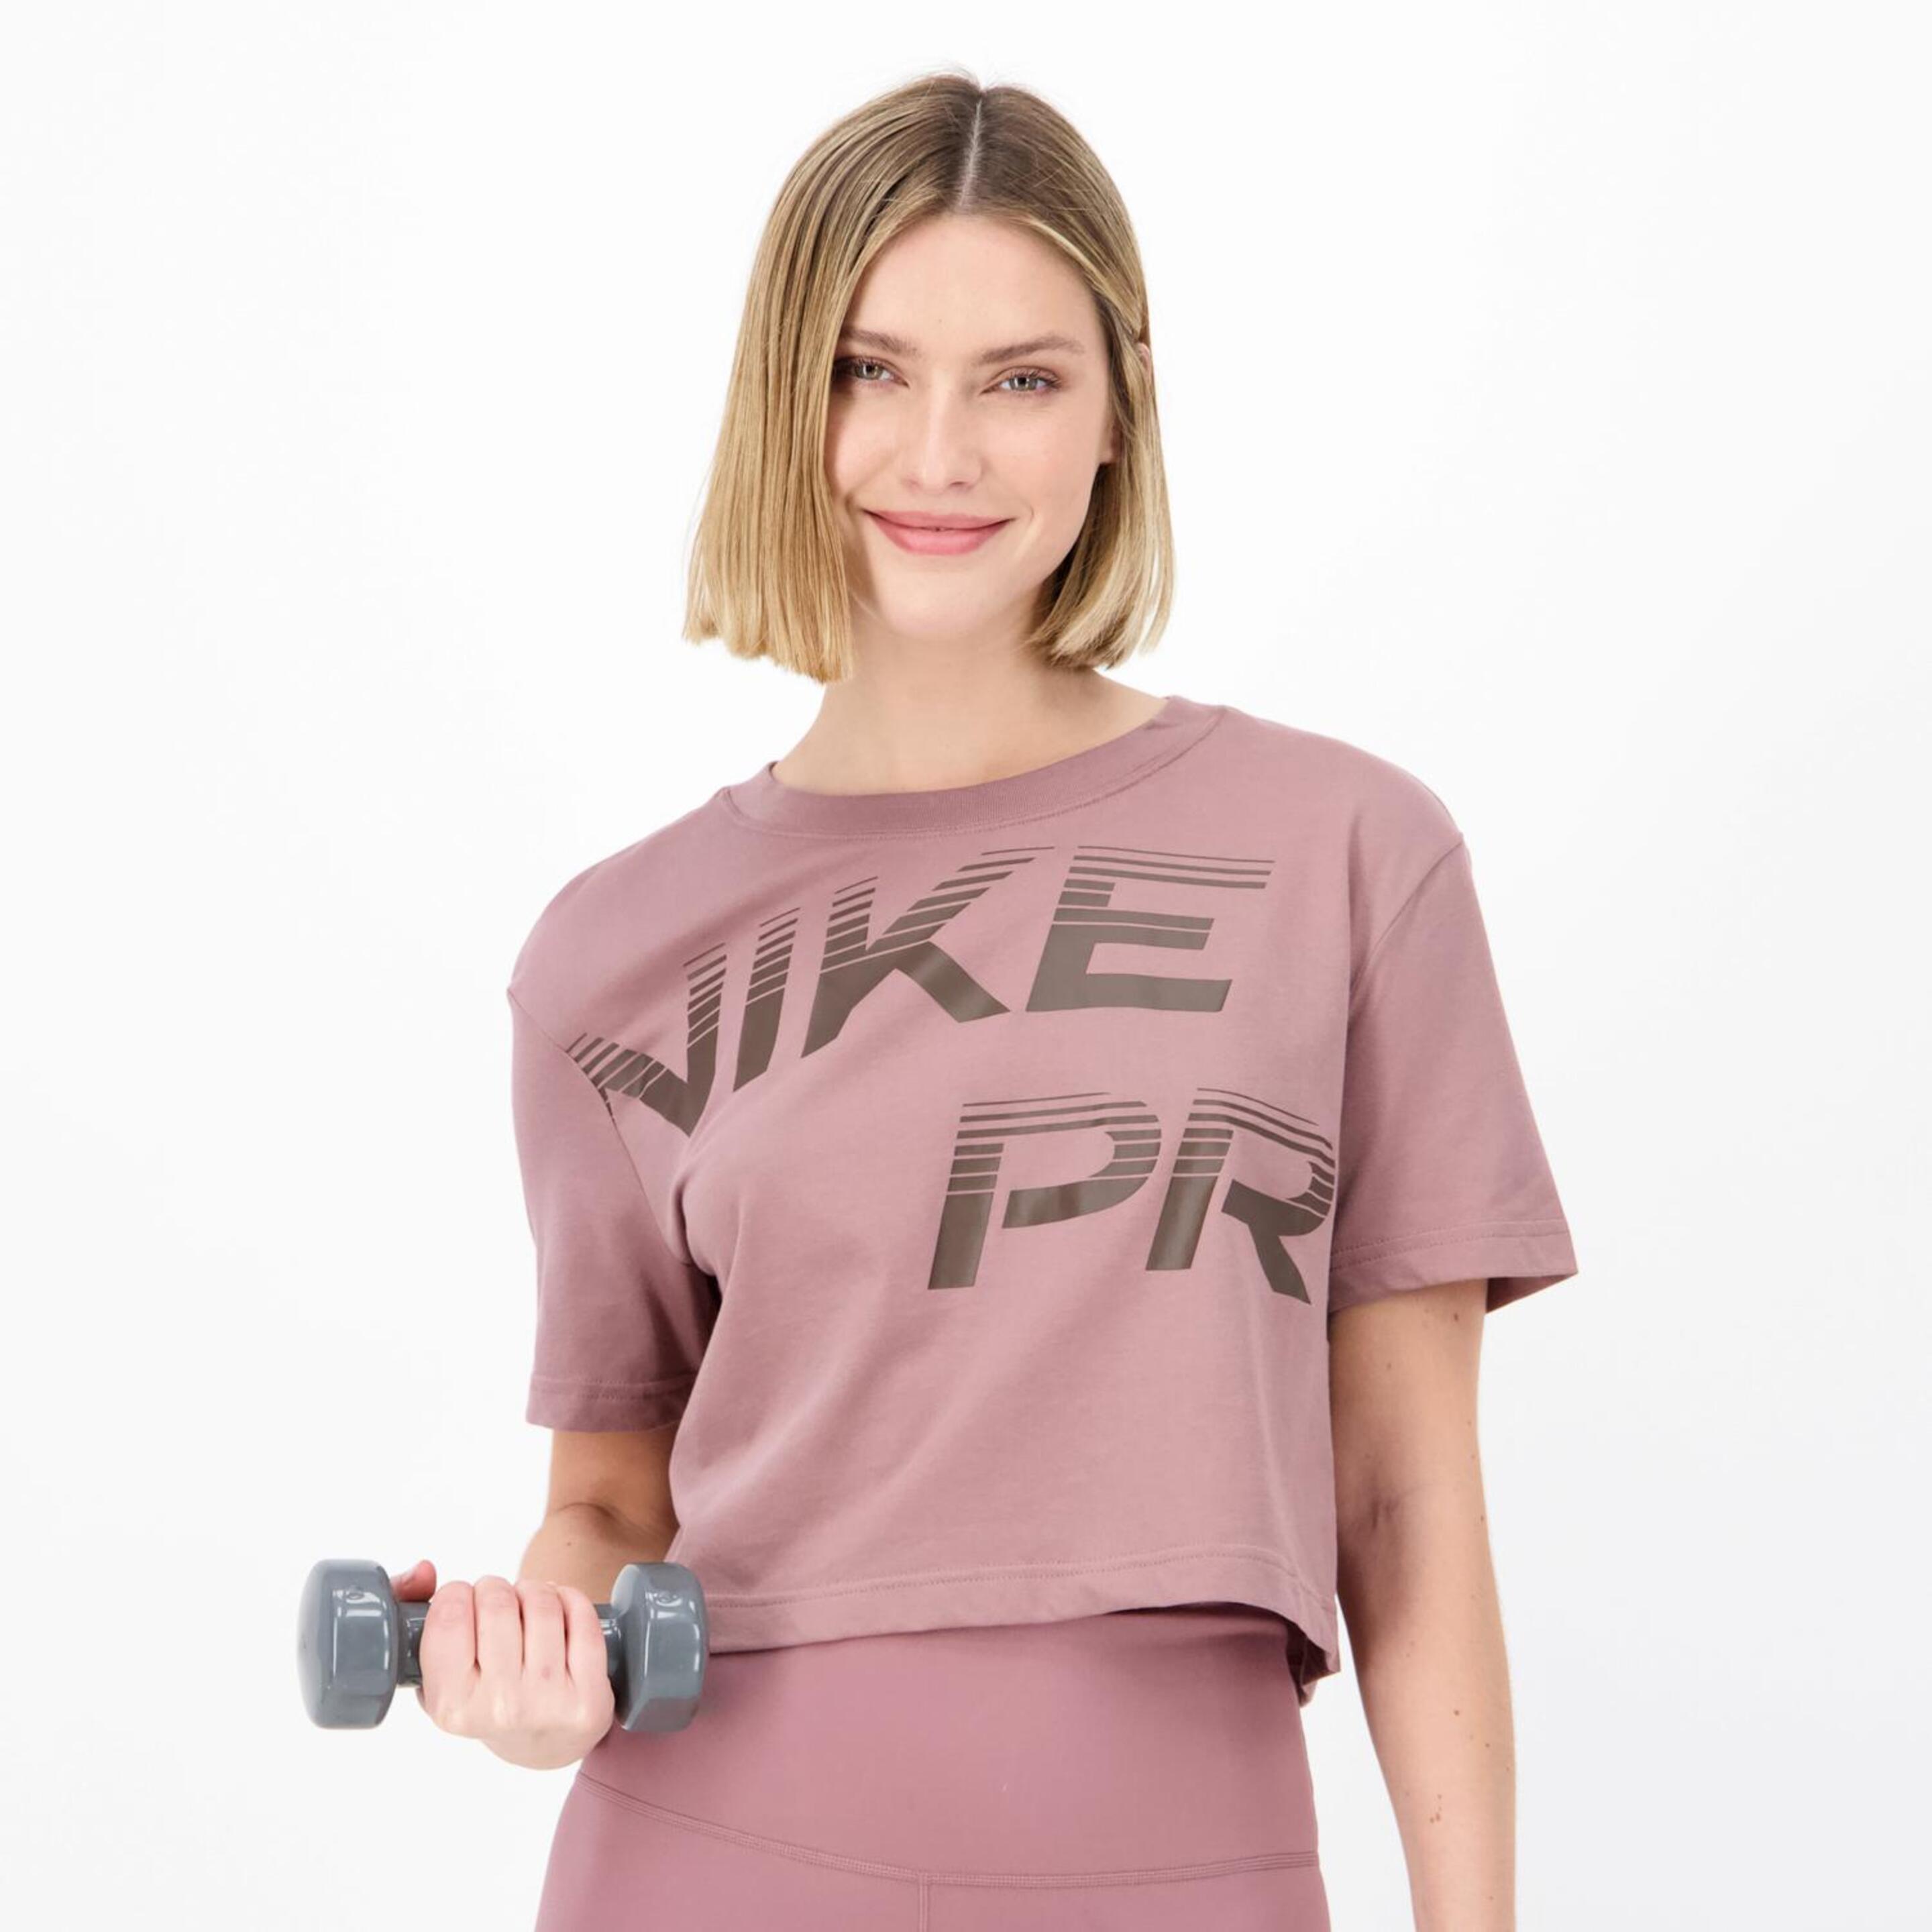 T-shirt Nike - morado - T-shirt Boxy Mulher